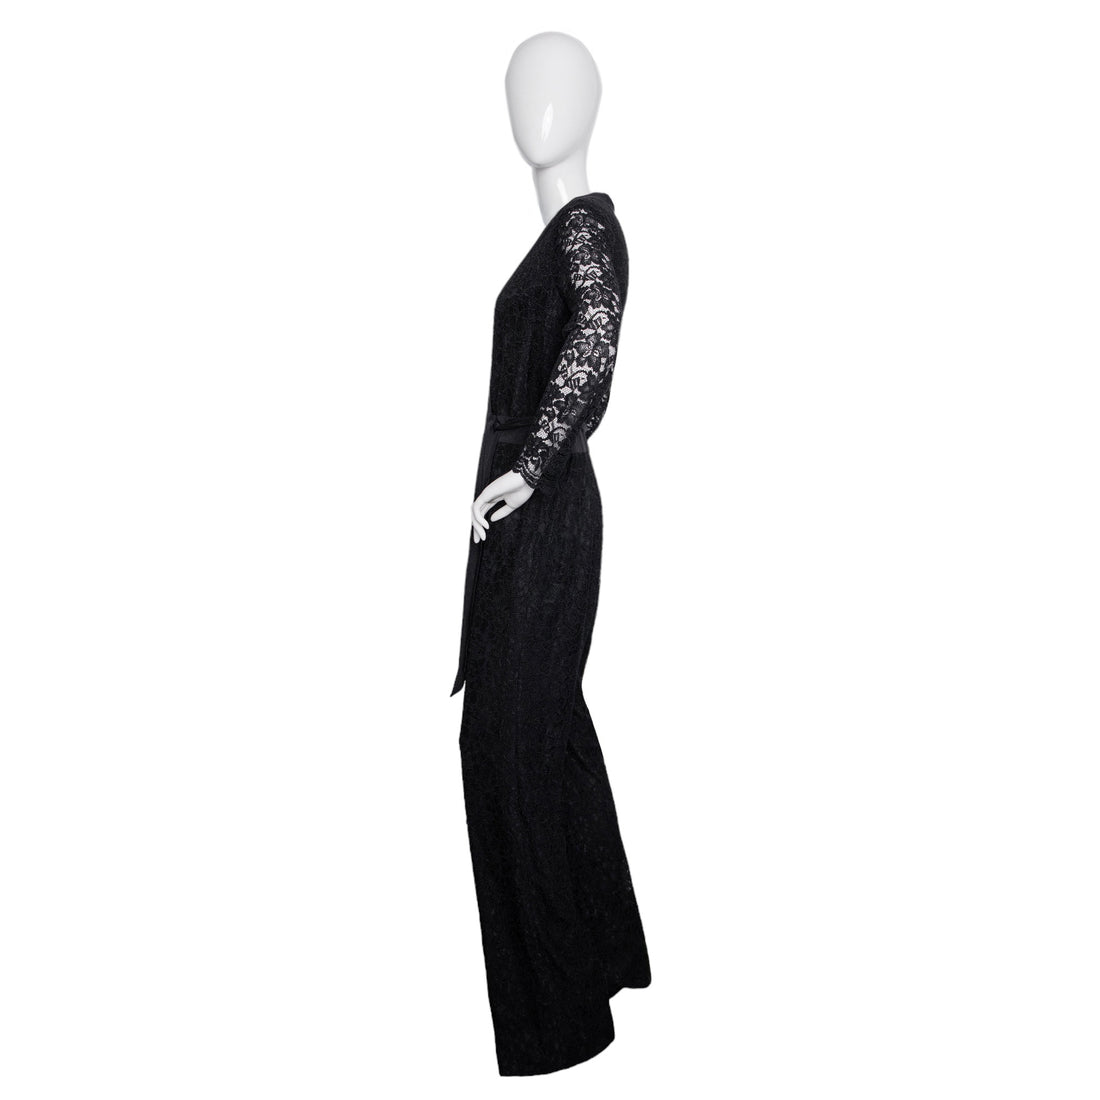 Diane von Furstenberg Elegant jumpsuit made of black lace